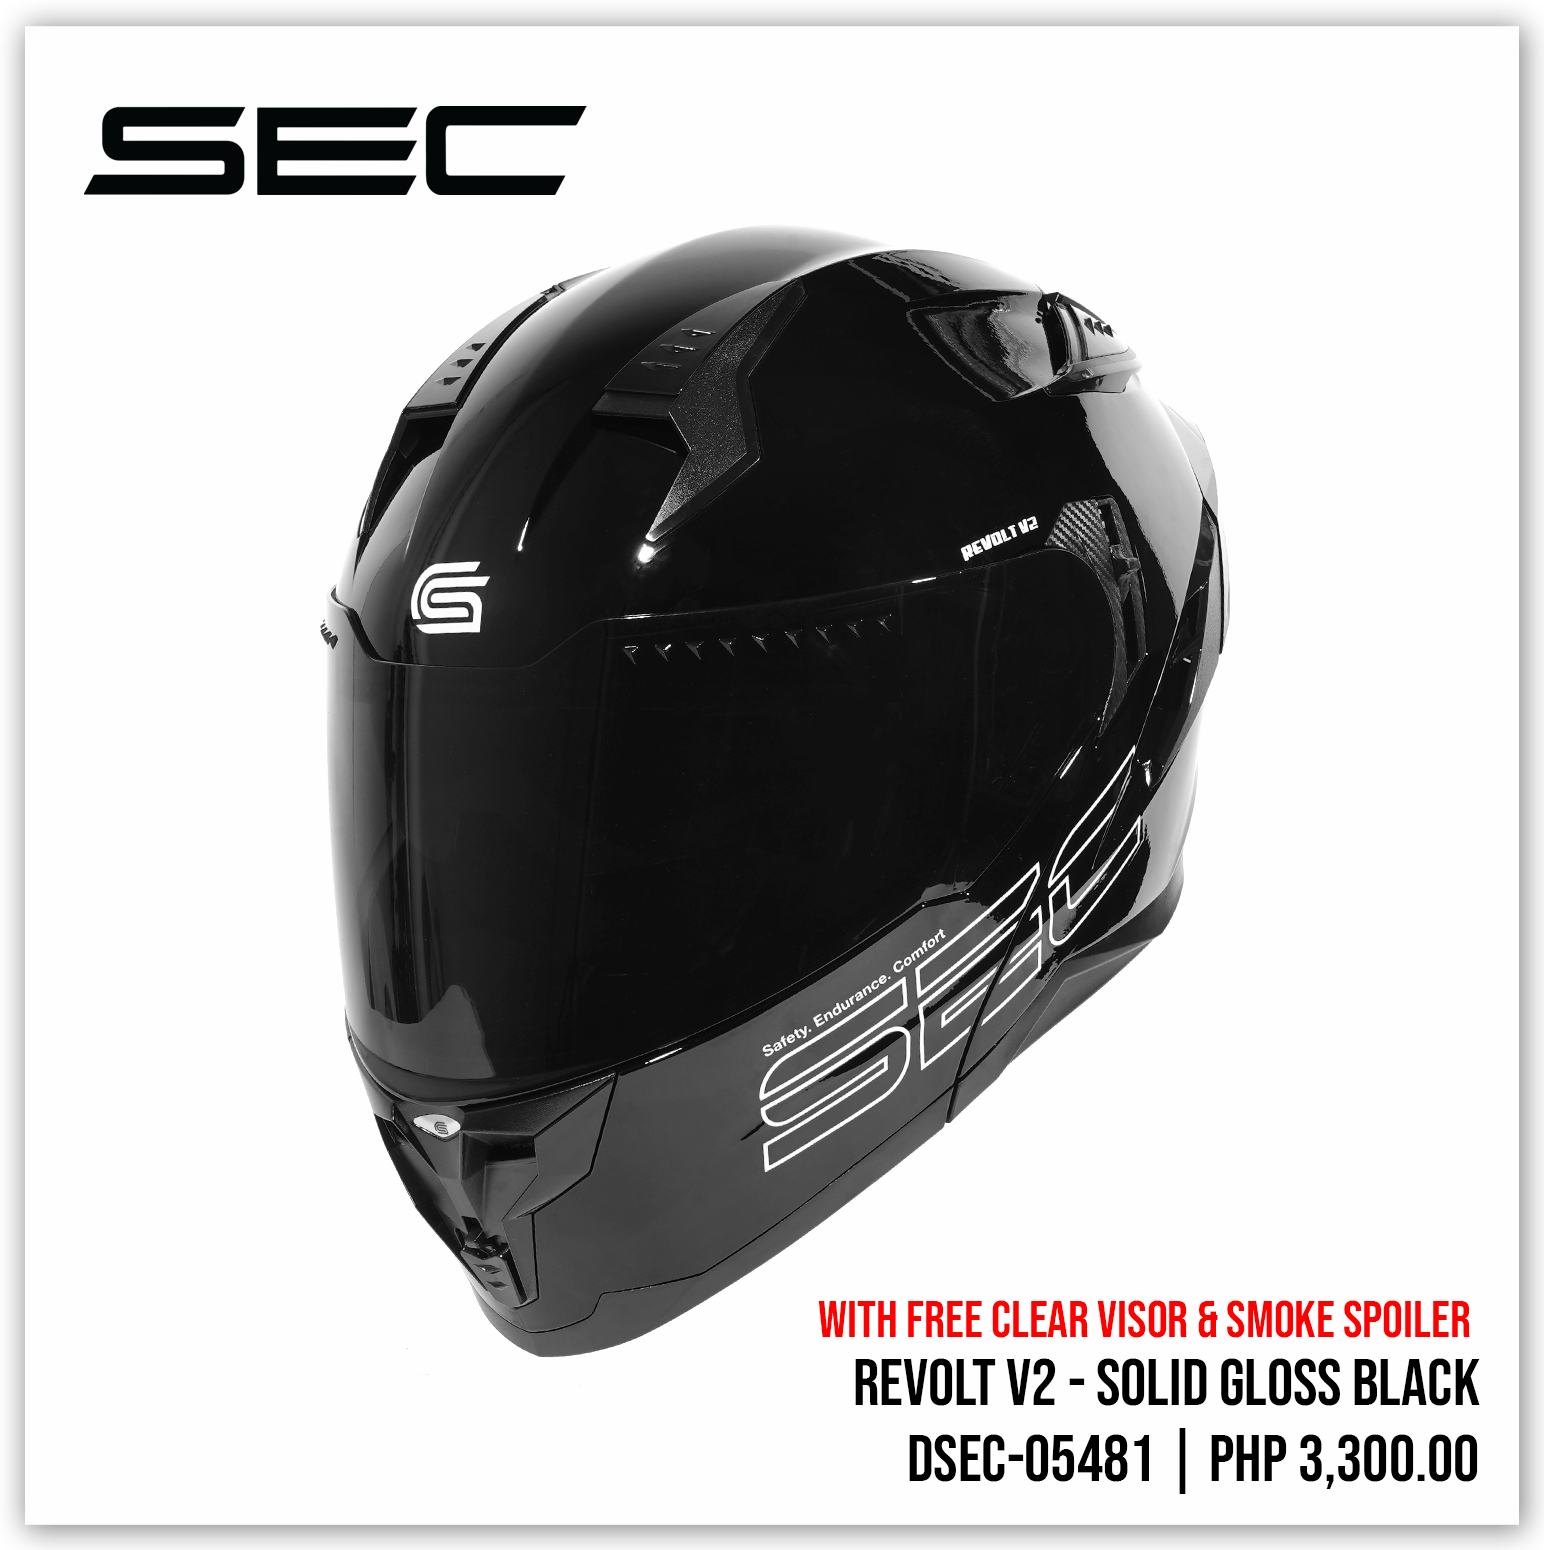 Revolt V2 - Solid Gloss Black